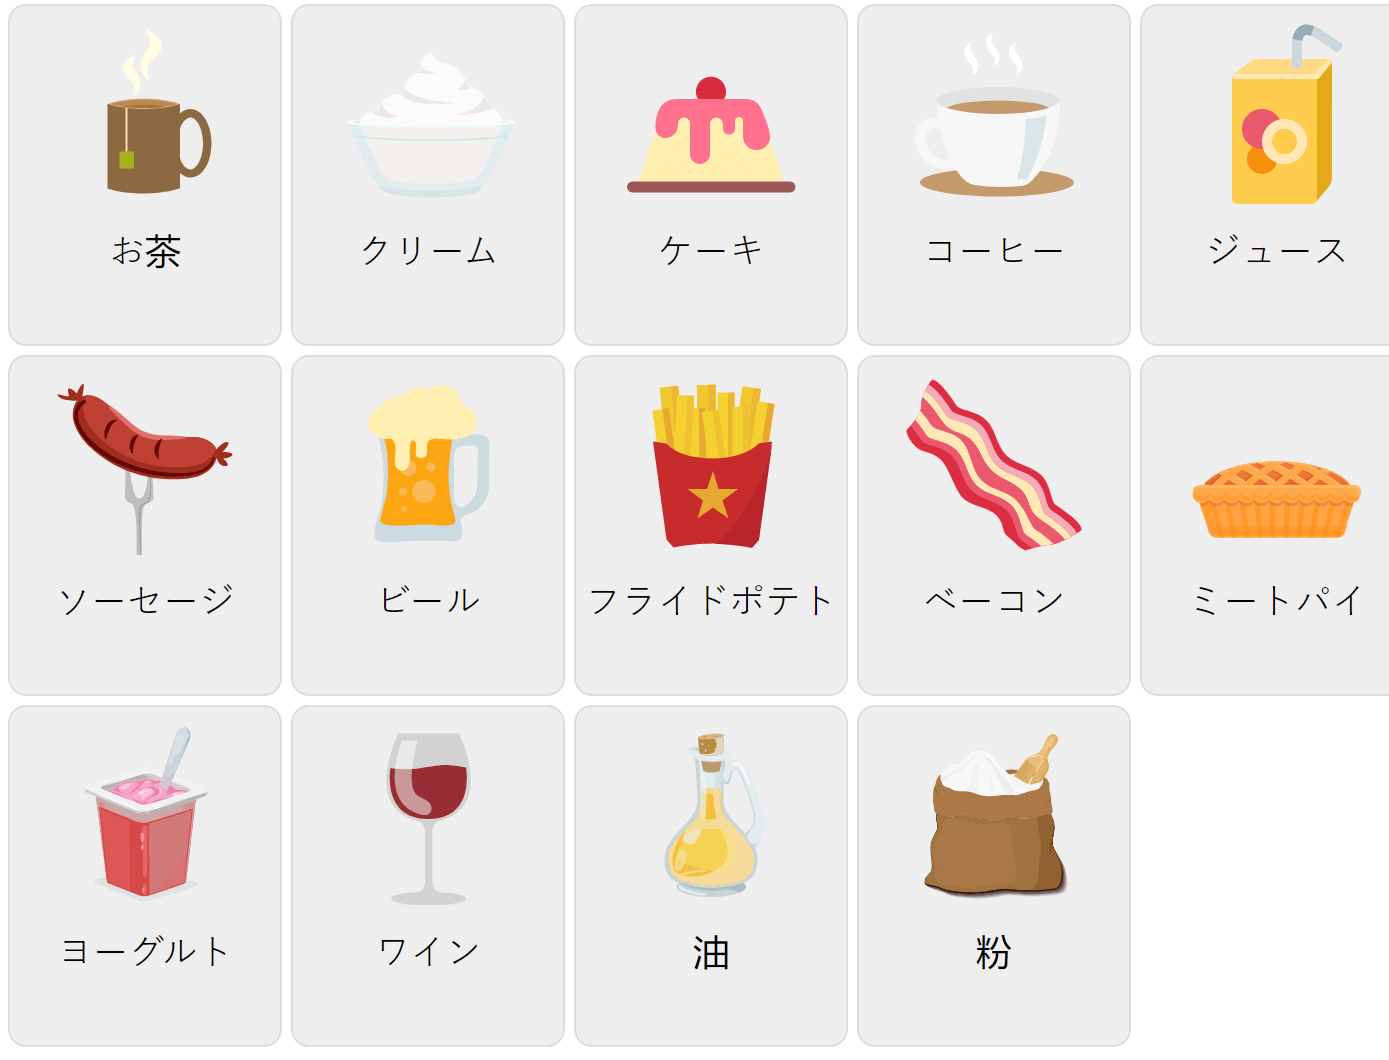 Еда на японском языке 2